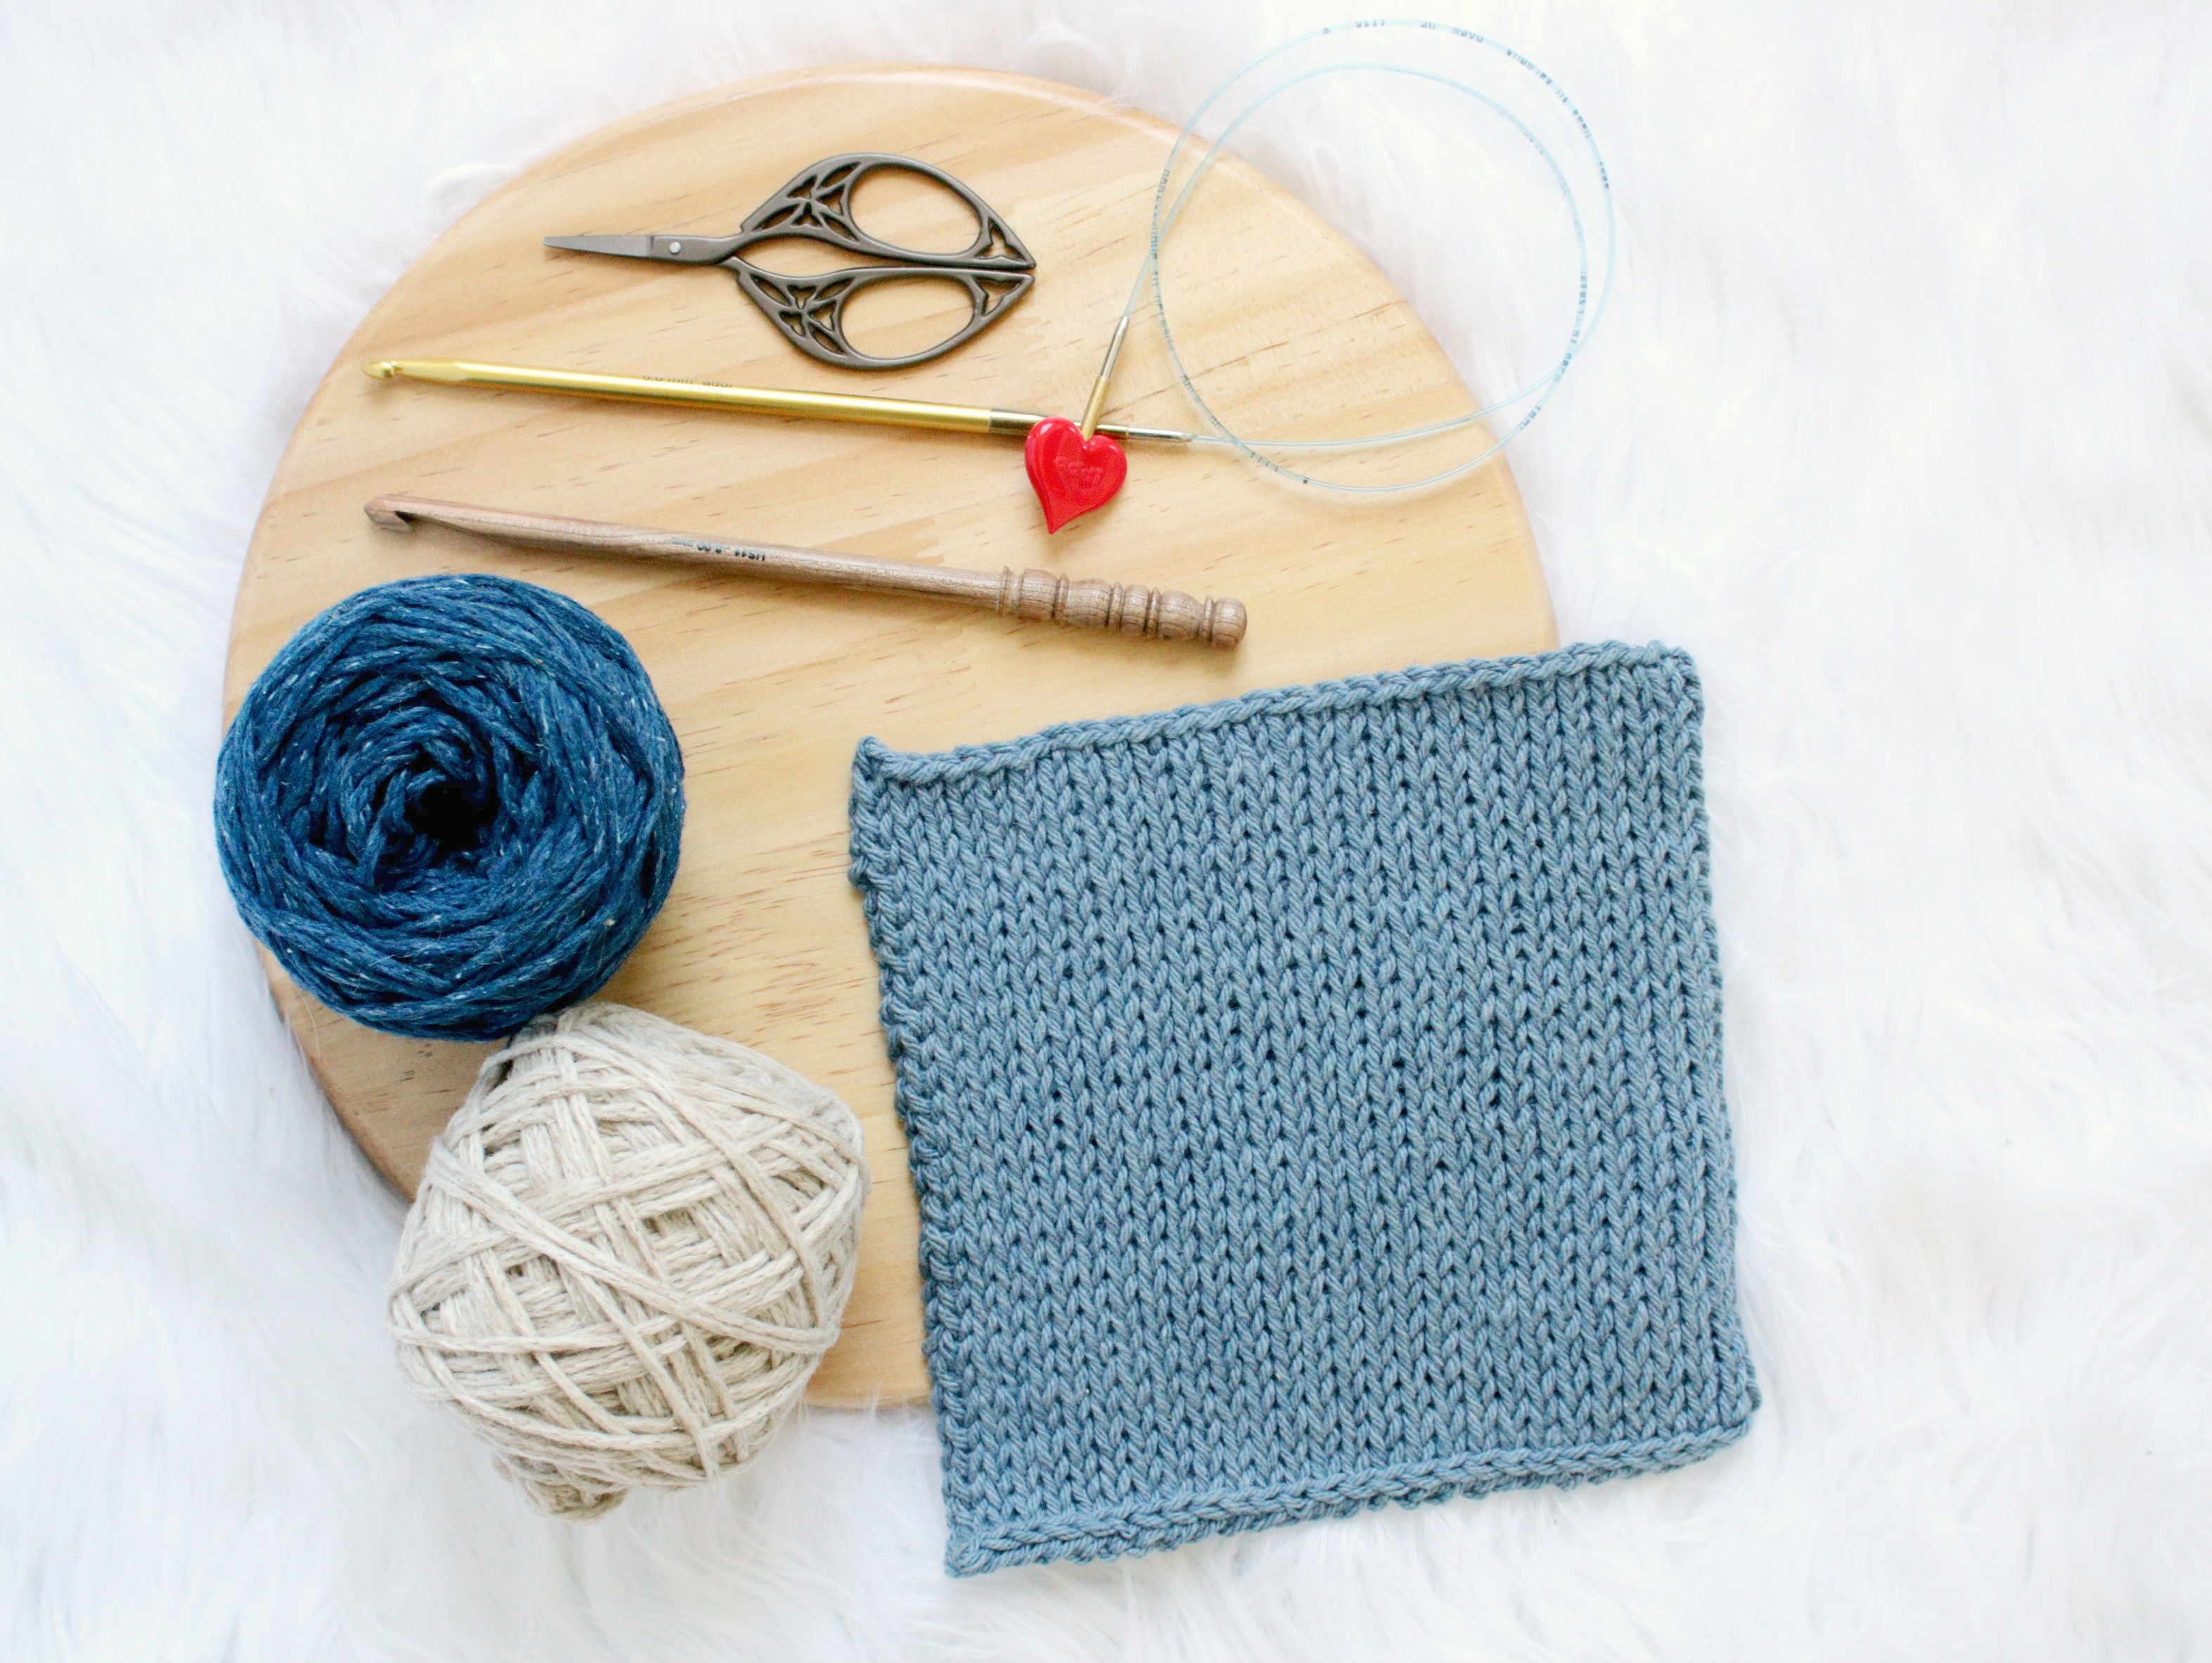 Tunisian crochet tools and supplies